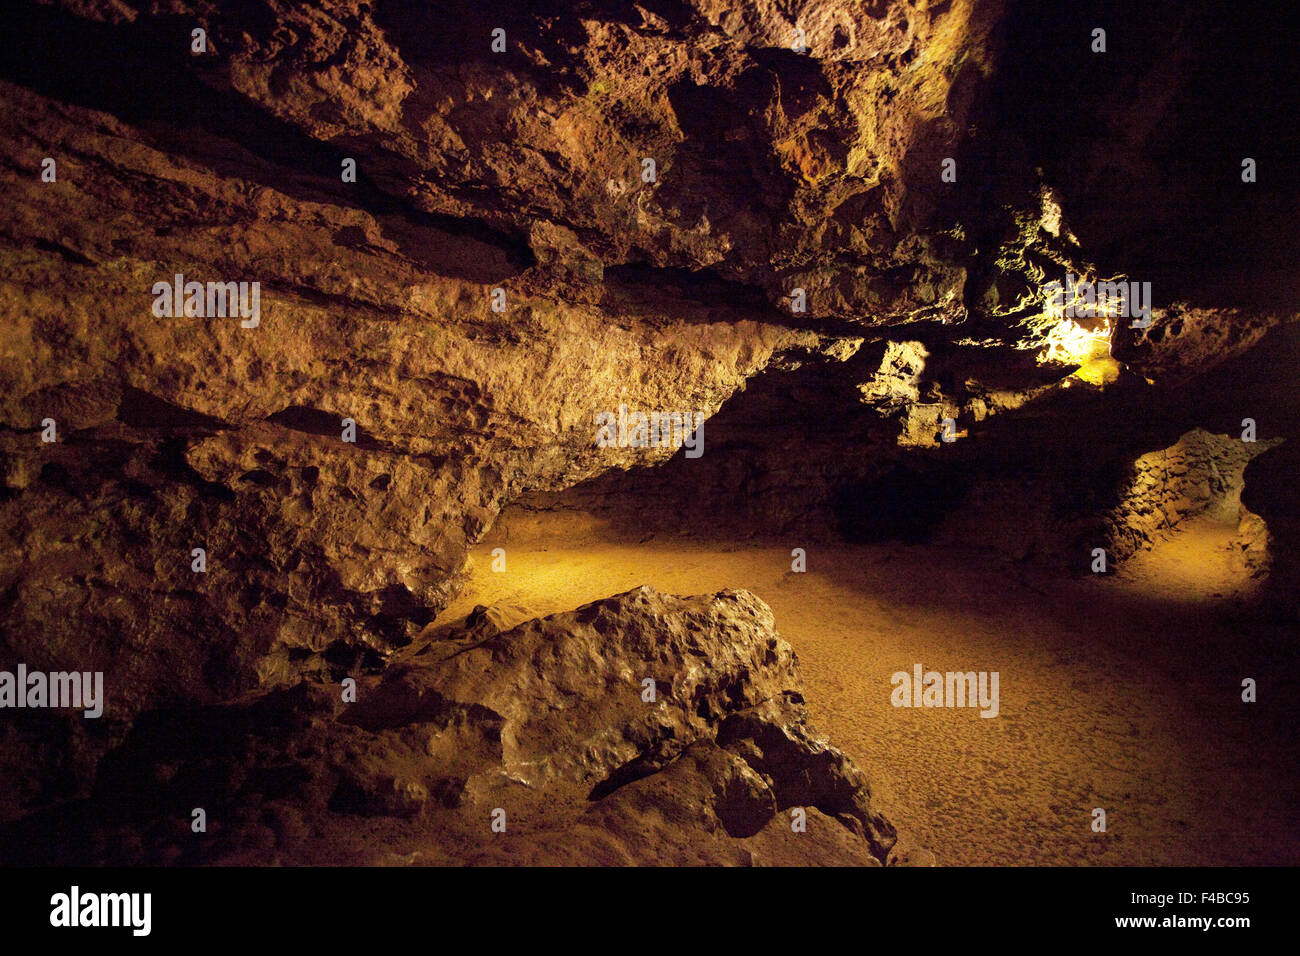 Klutert cave Schwelm, Germany. Stock Photo